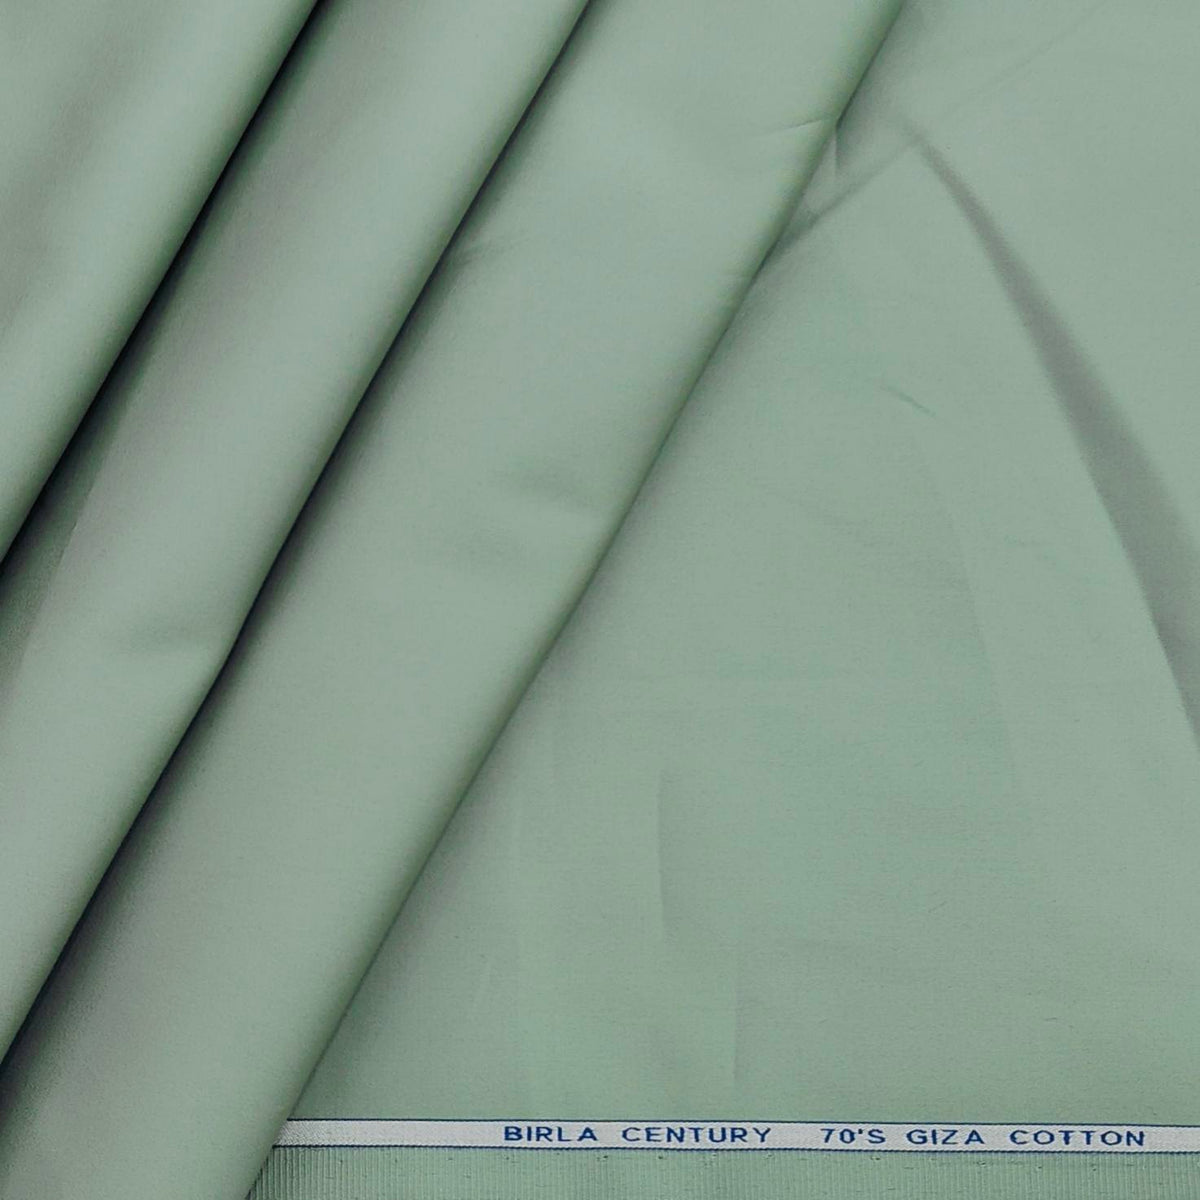 Birla Century Men’s 70’s Giza Cotton Solids Unstitched Shirting Fabric (Deep Green Colour)